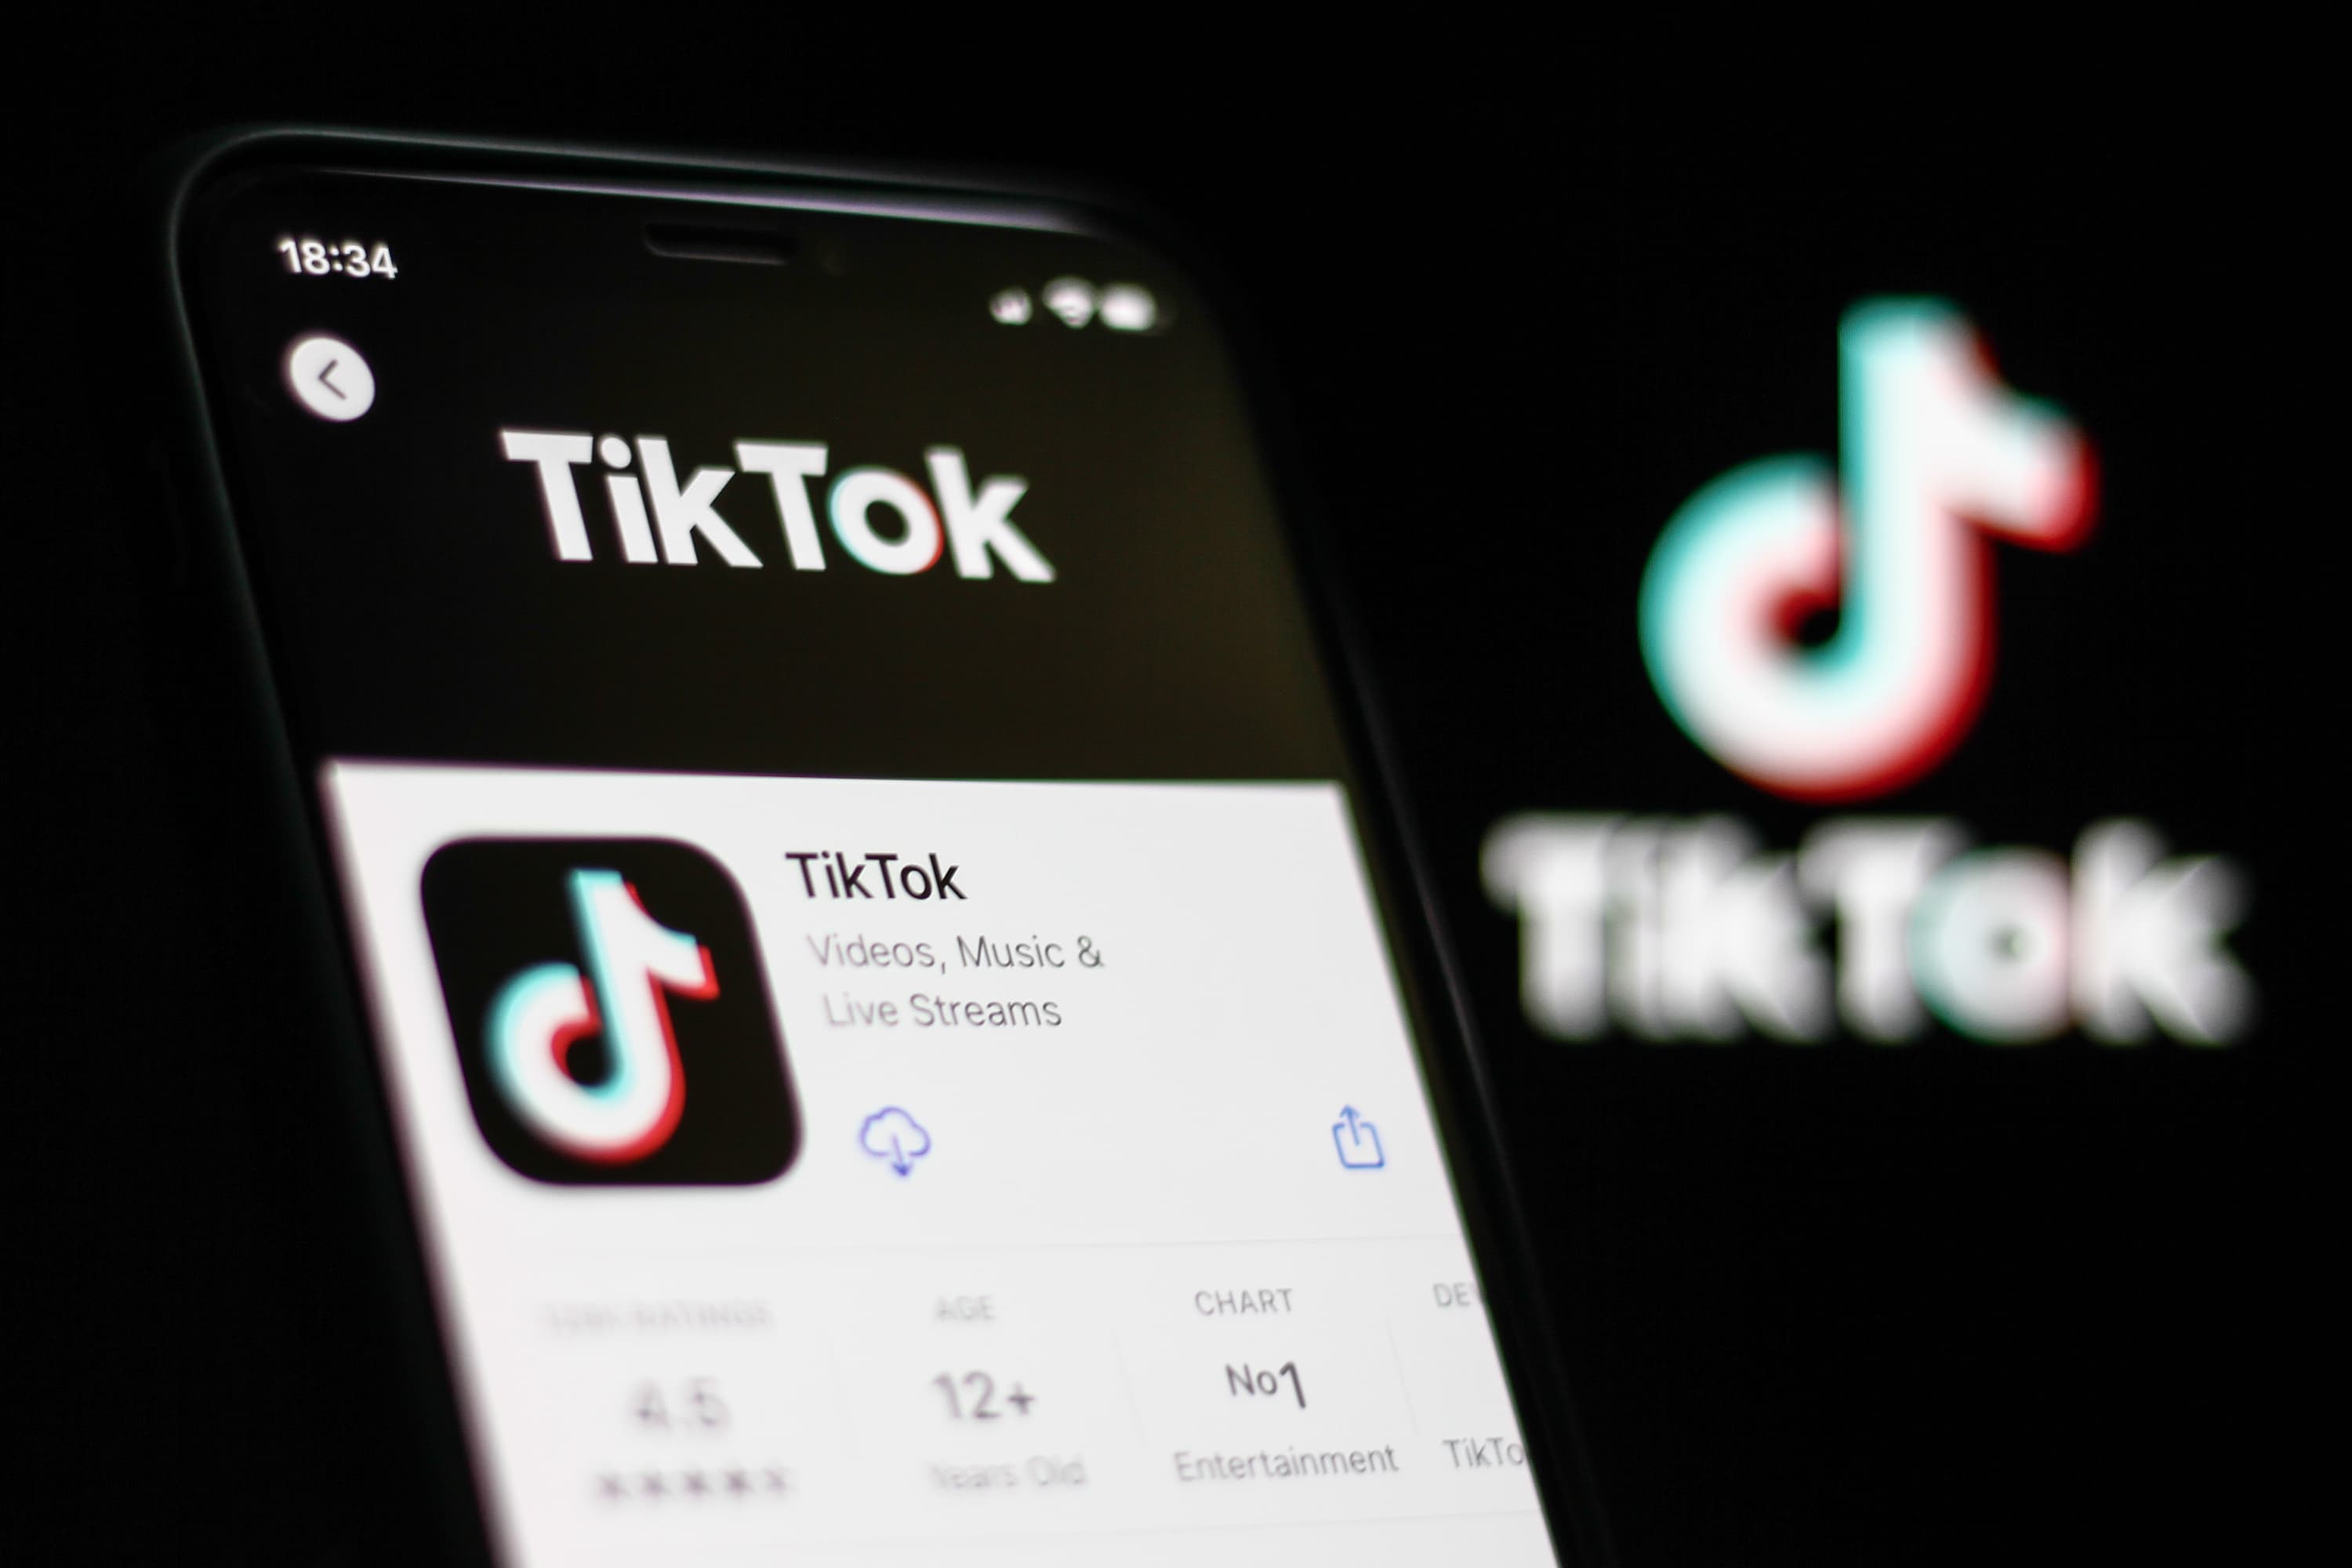 TikTok application on app store